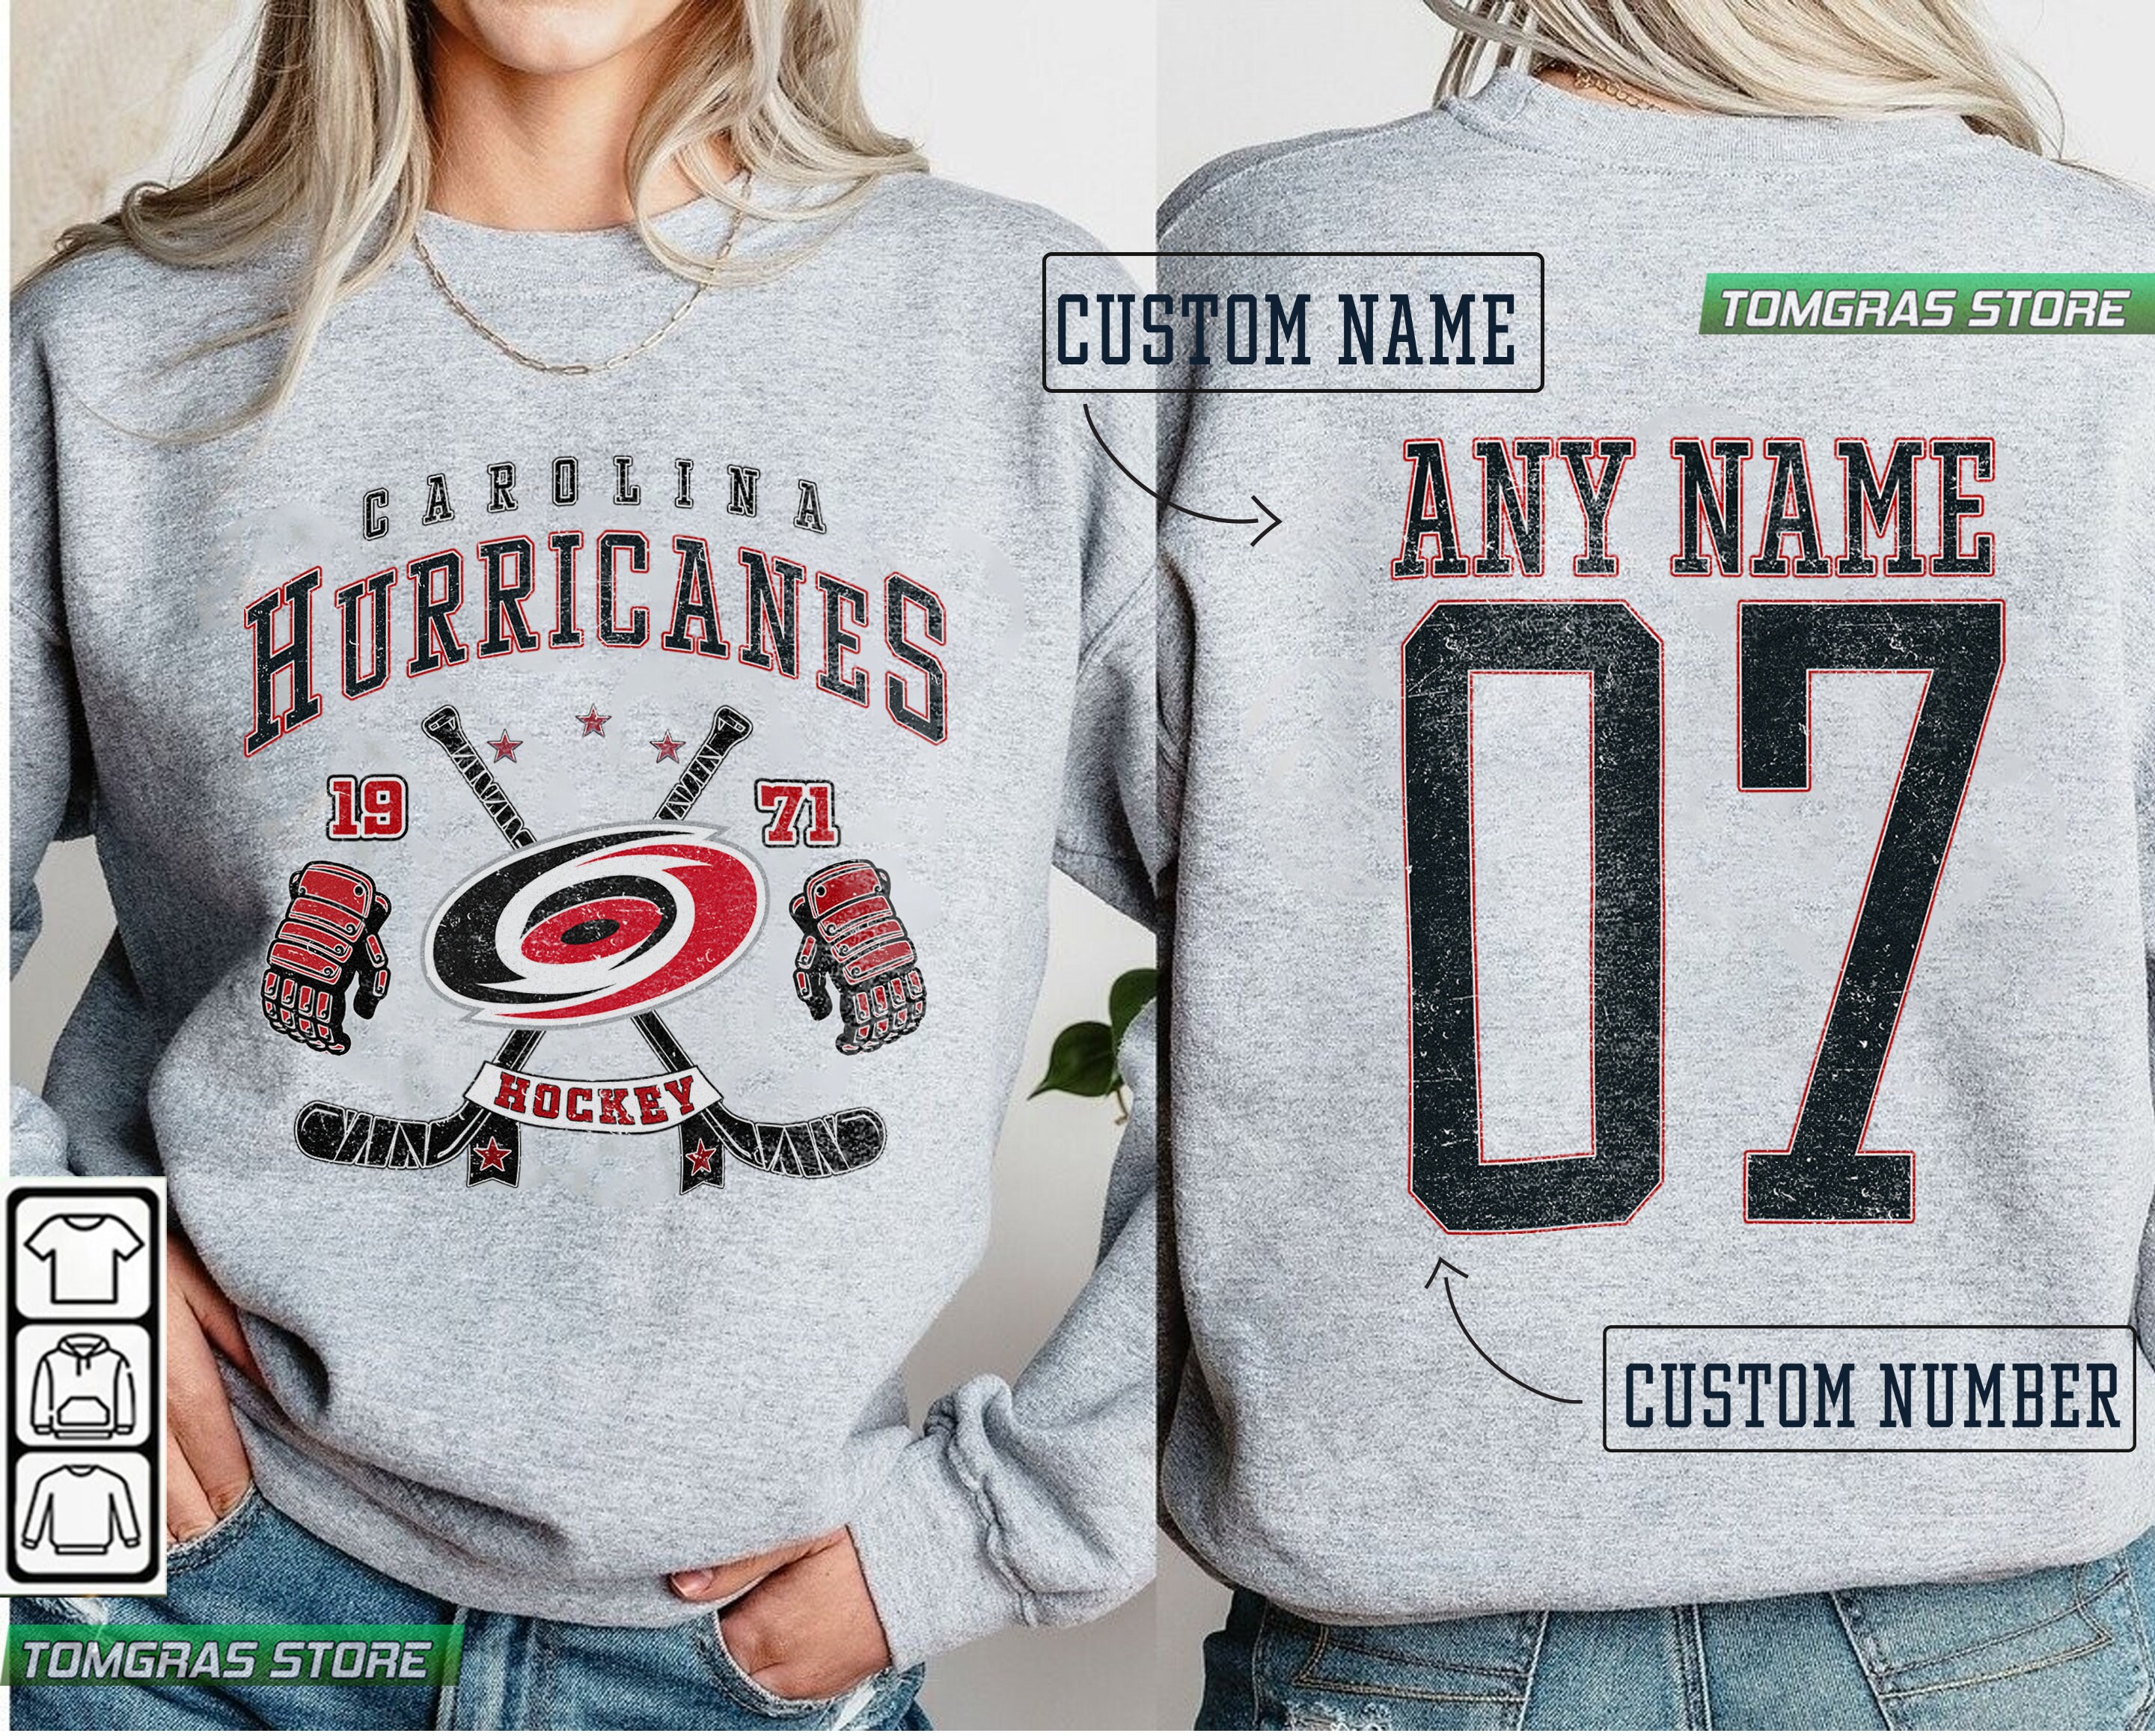 Carolina Hurricanes Mascot Shirt